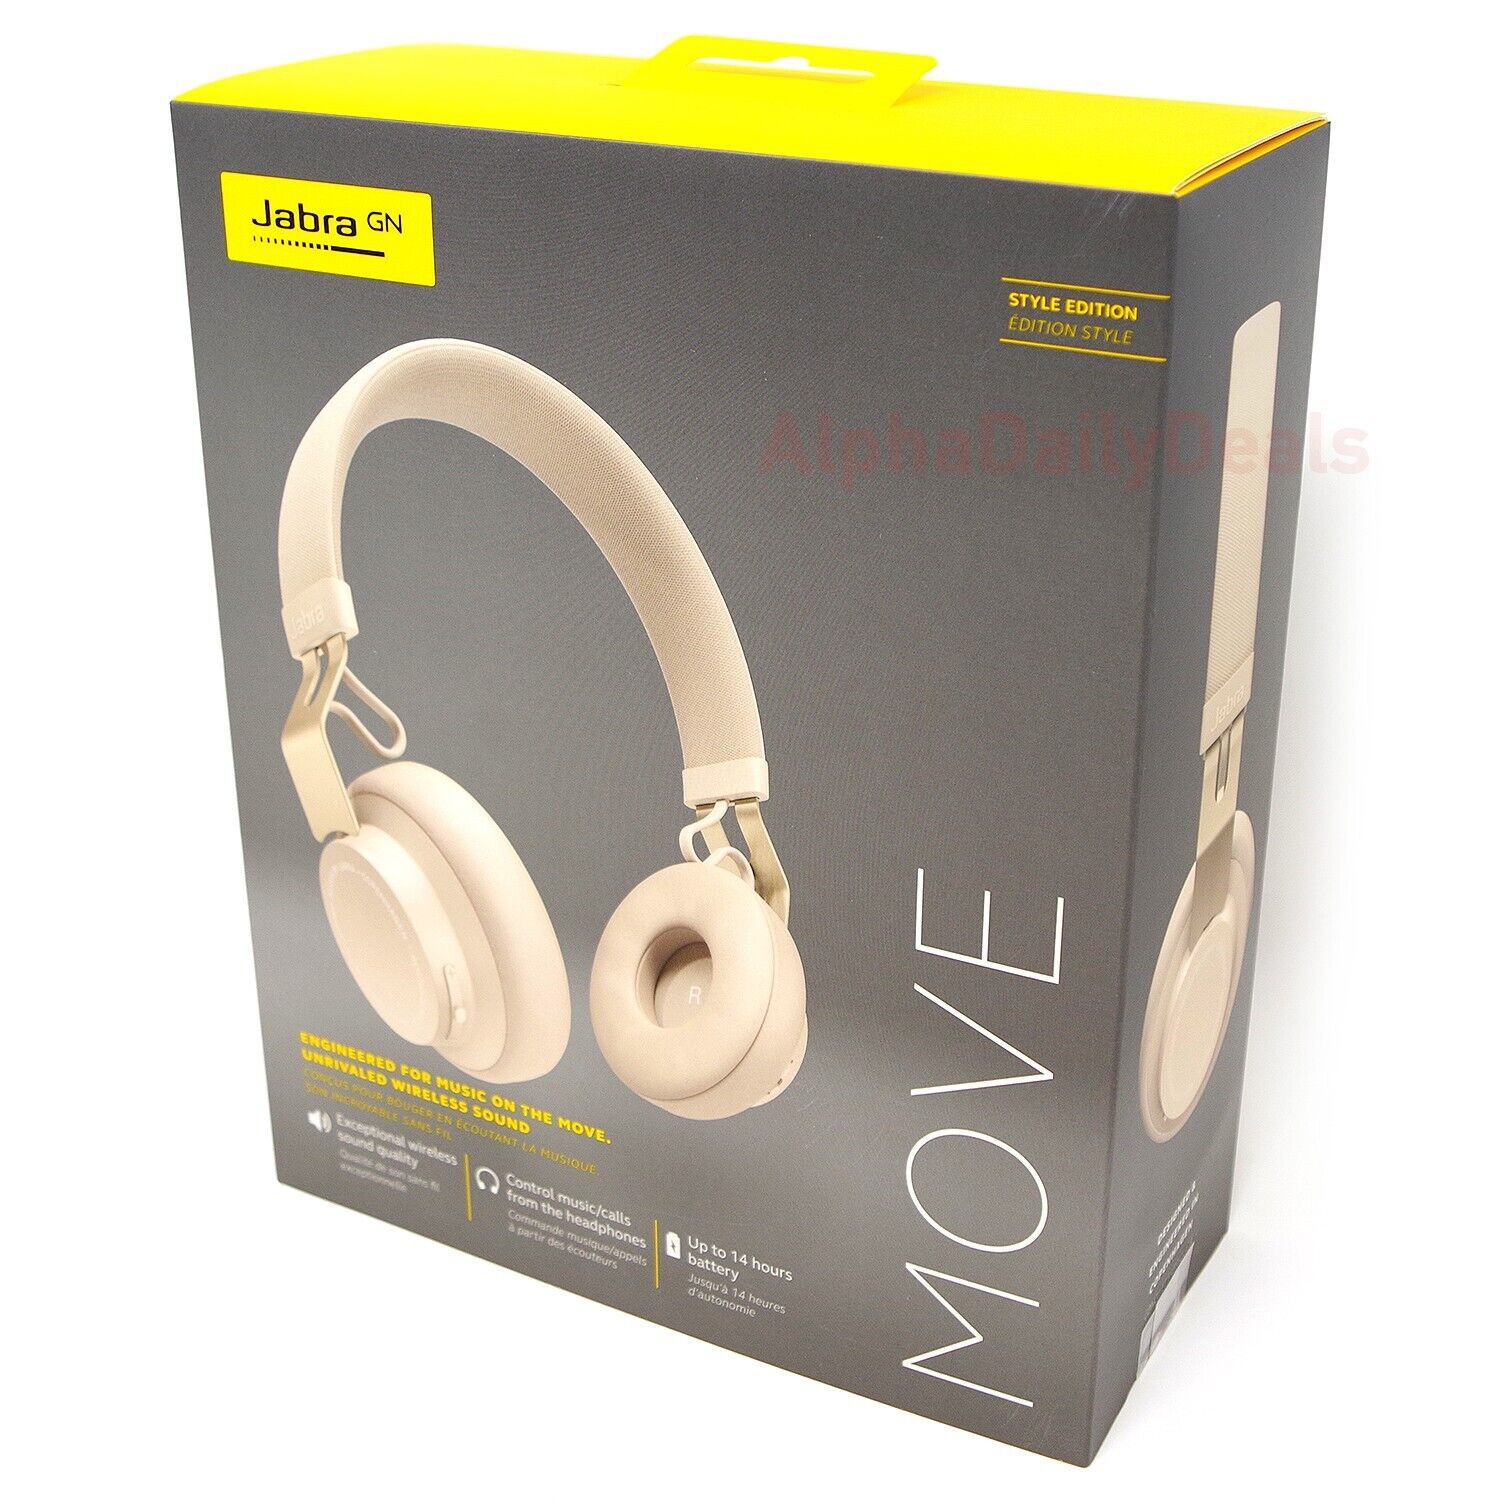 NEW Jabra Move Style Edition Wireless Bluetooth On Ear Stereo Headphones Beige